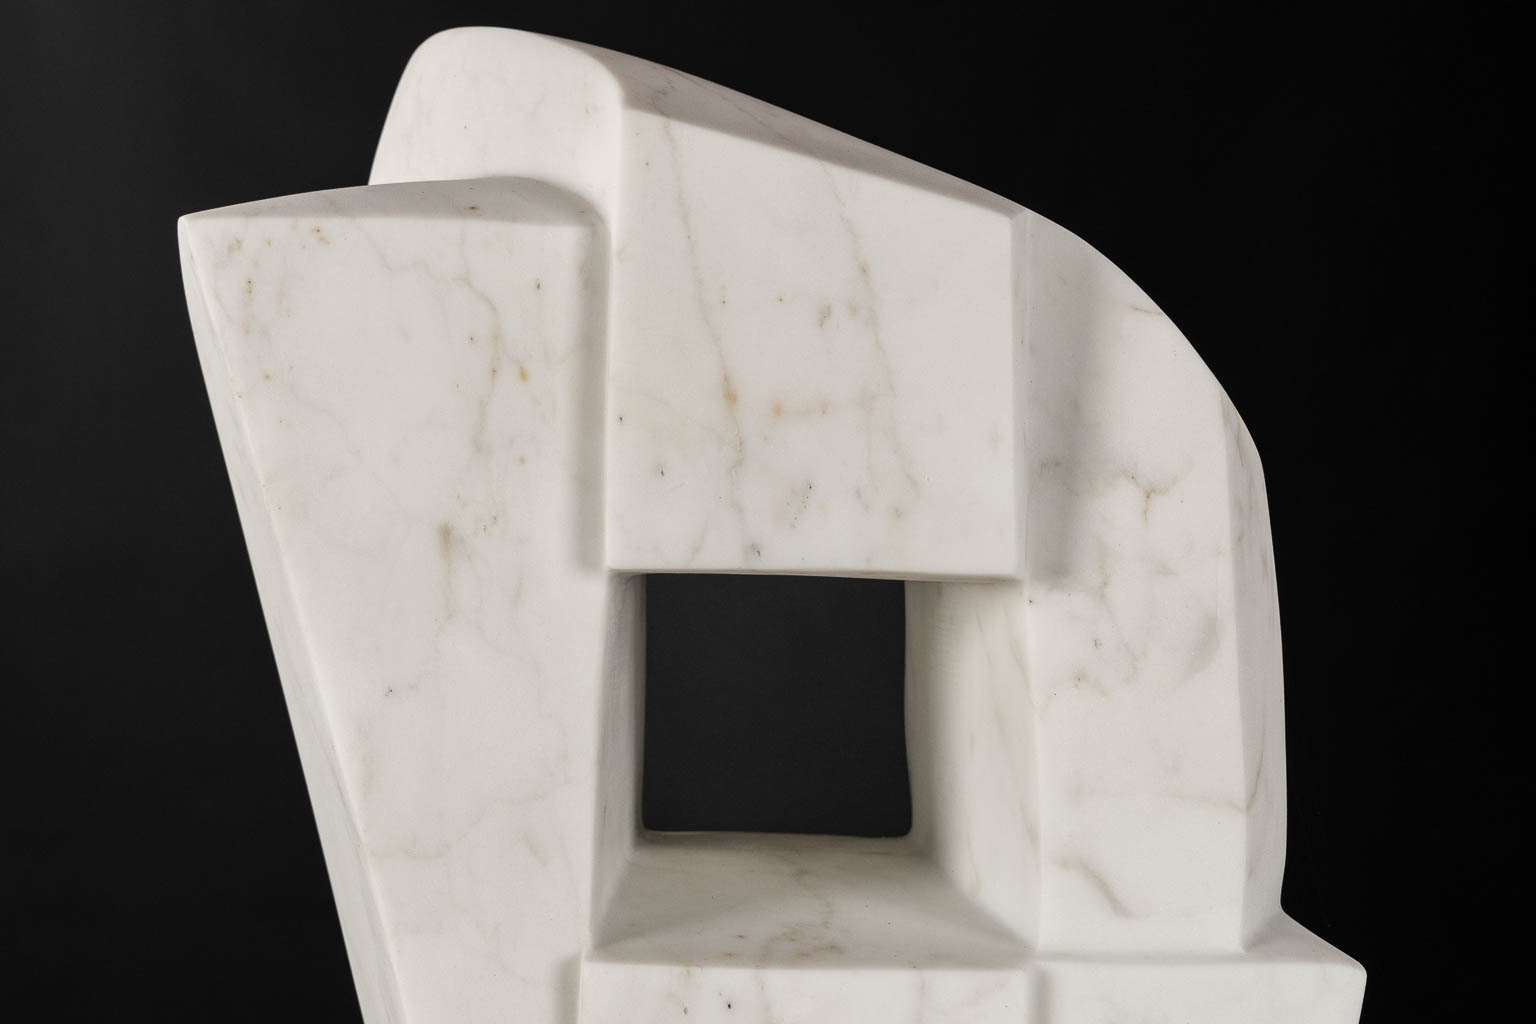 Lieven DEBRABANDERE (1945) 'De Gezant' Sculptured Carrara marmer. 2010. (L:42 x W:40 x H:96 cm)